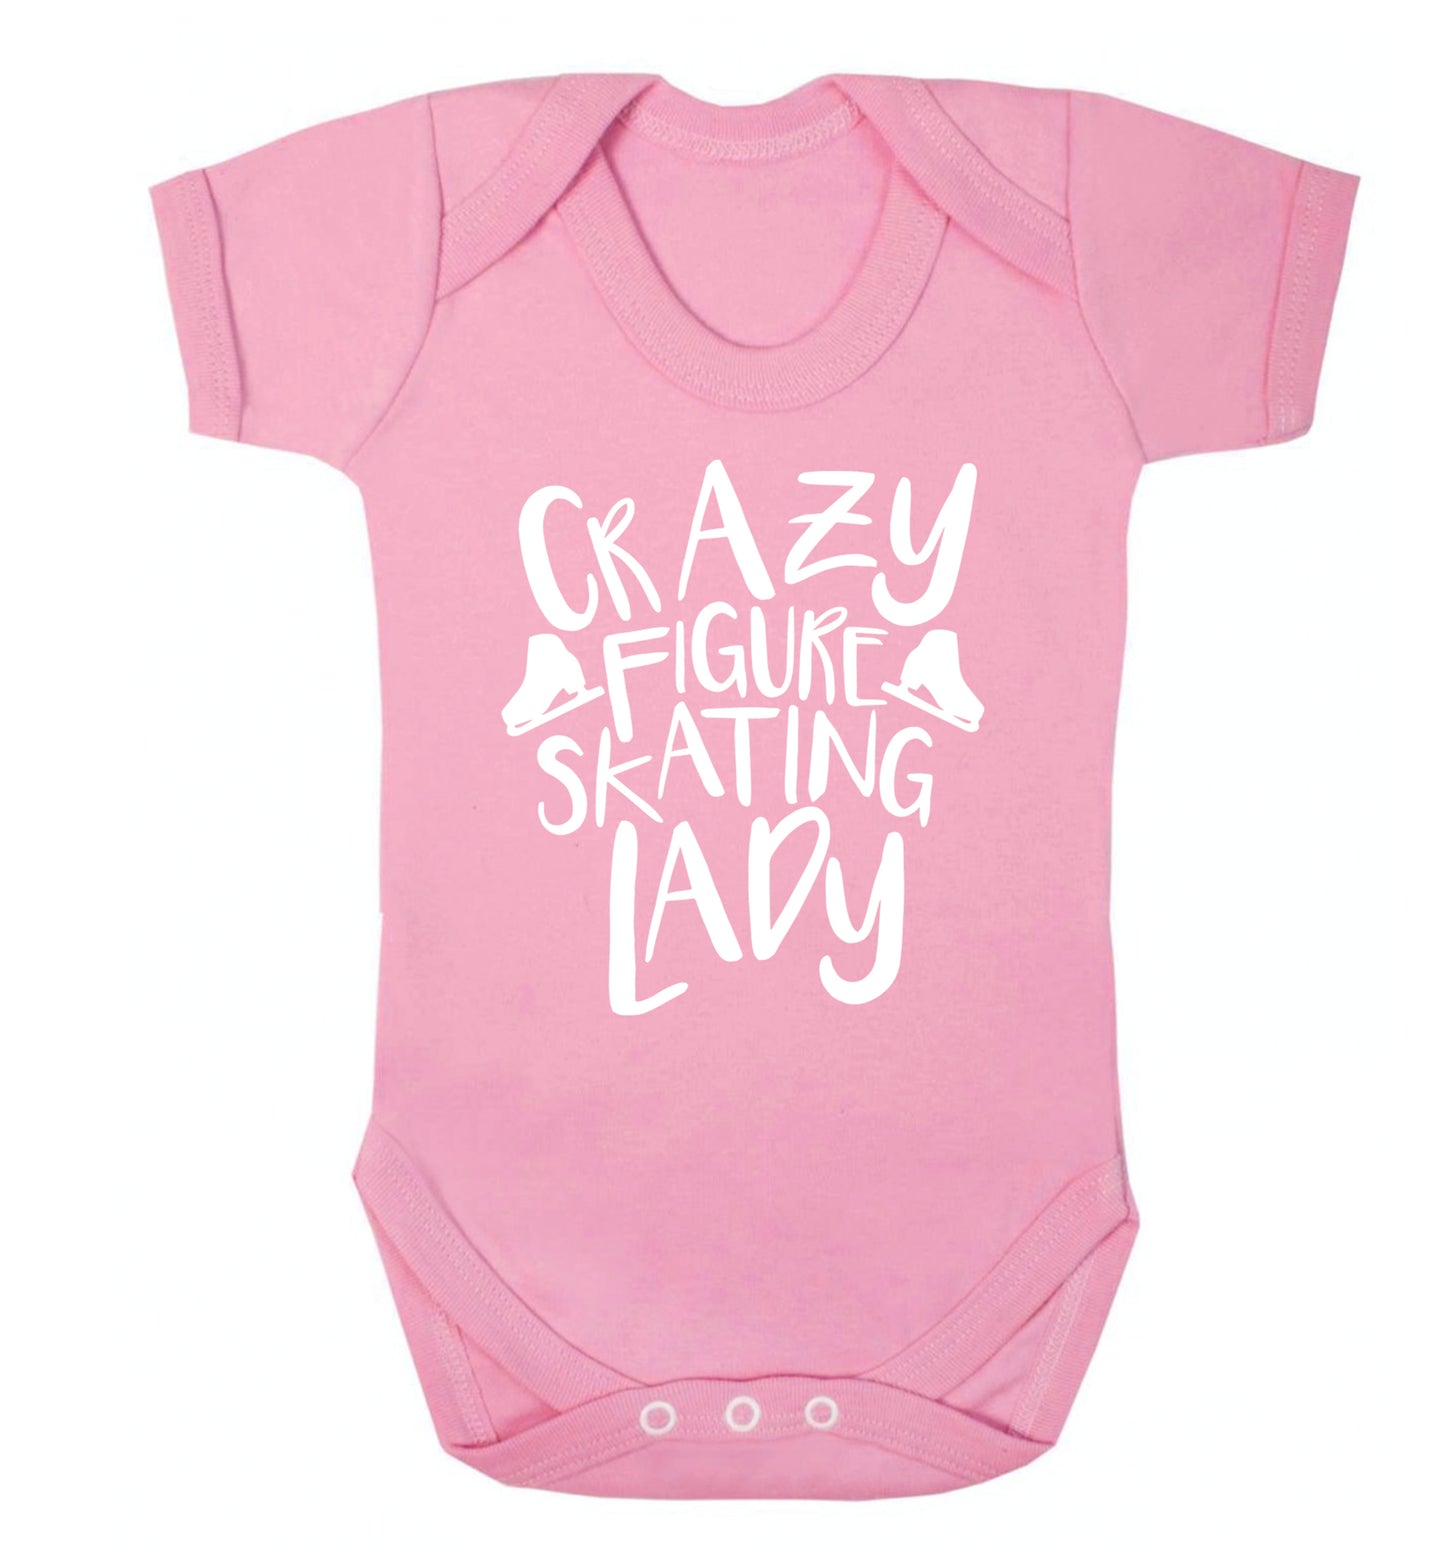 Crazy figure skating lady Baby Vest pale pink 18-24 months